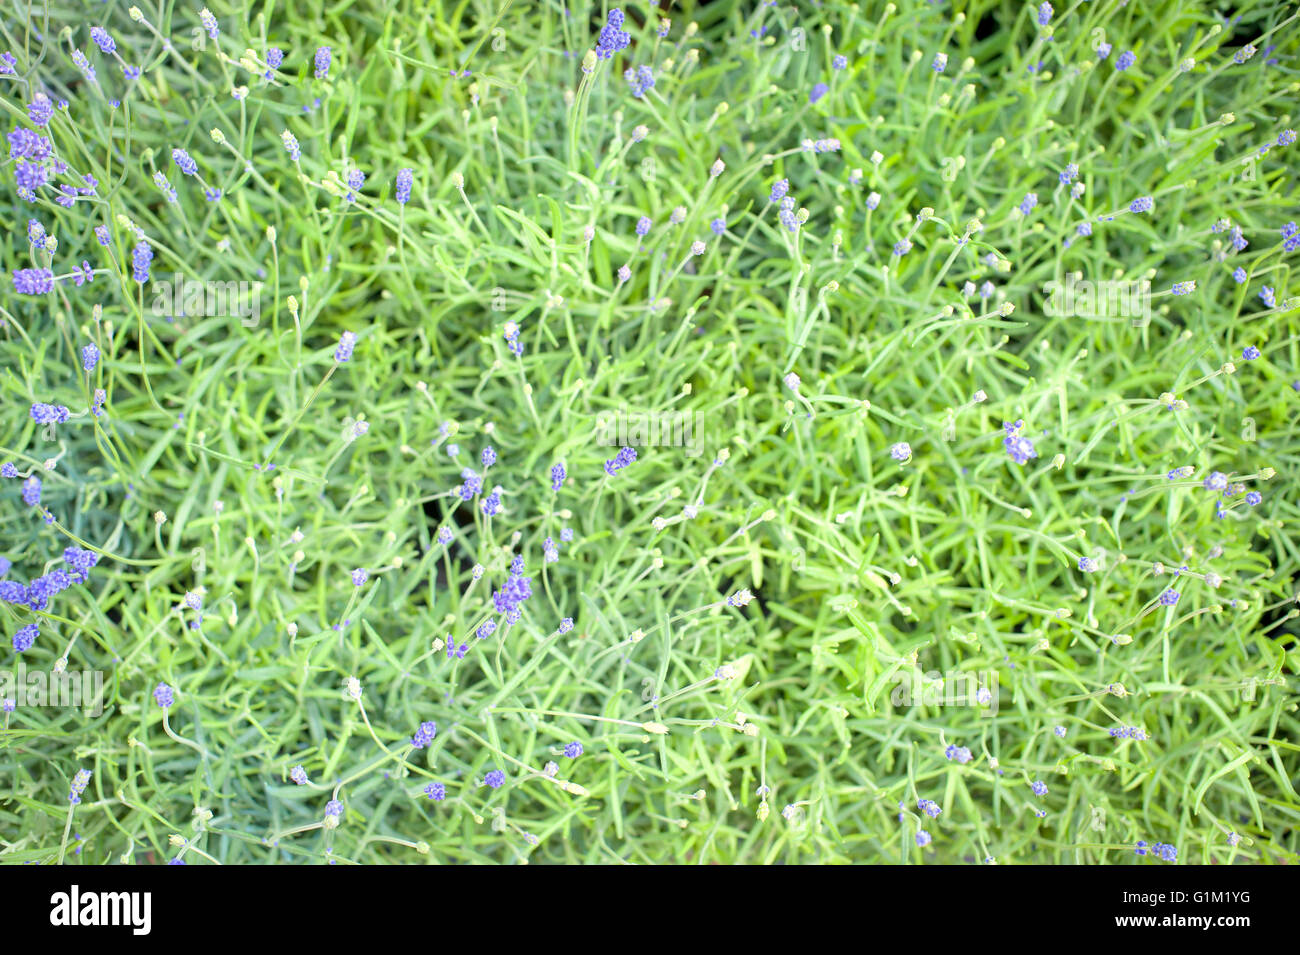 Lavendel-Busch grün mit lila Blüten Nahaufnahme in selektiven Fokus Stockfoto